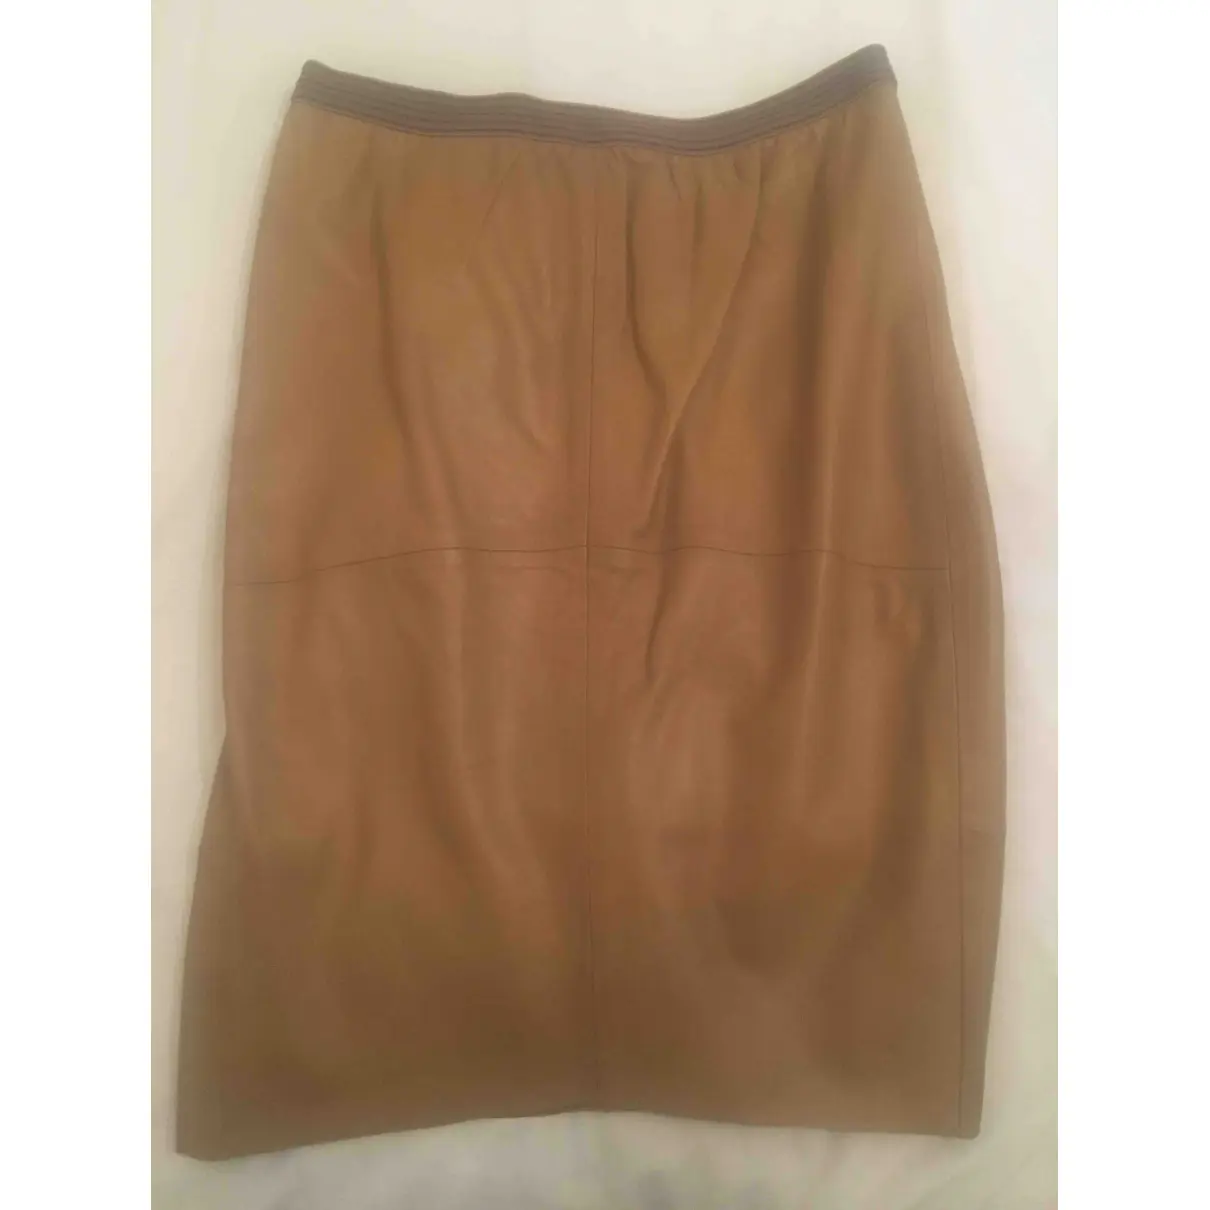 Buy Humanoid Leather mid-length skirt online